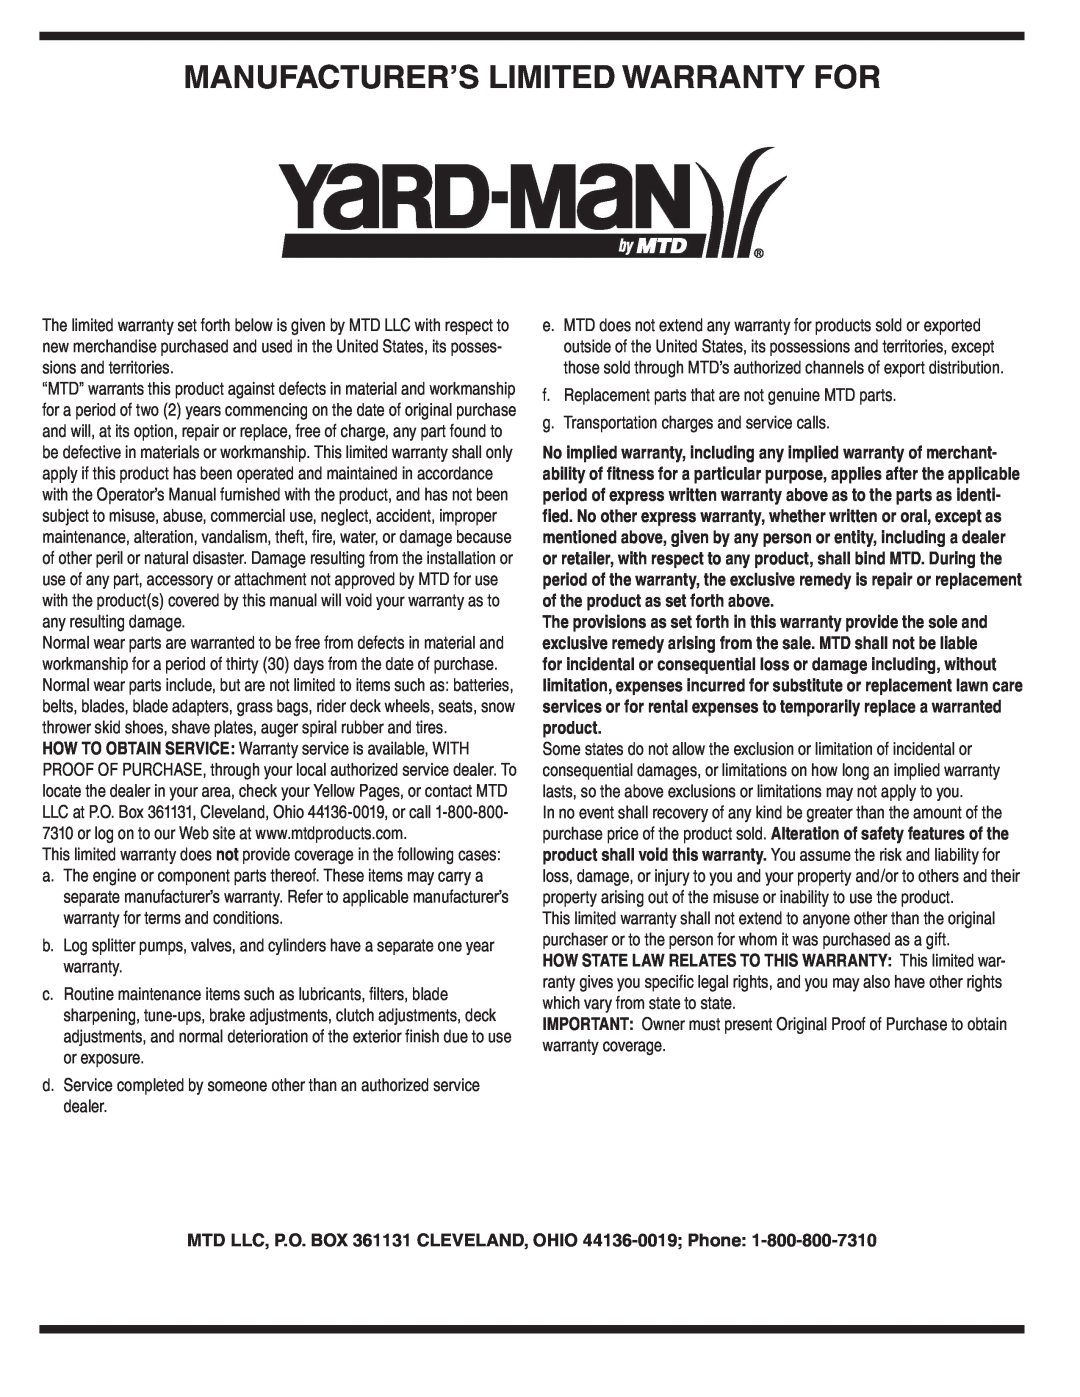 Yard-Man 430 warranty Manufacturer’S Limited Warranty For, MTD LLC, P.O. BOX 361131 CLEVELAND, OHIO 44136-0019 Phone 